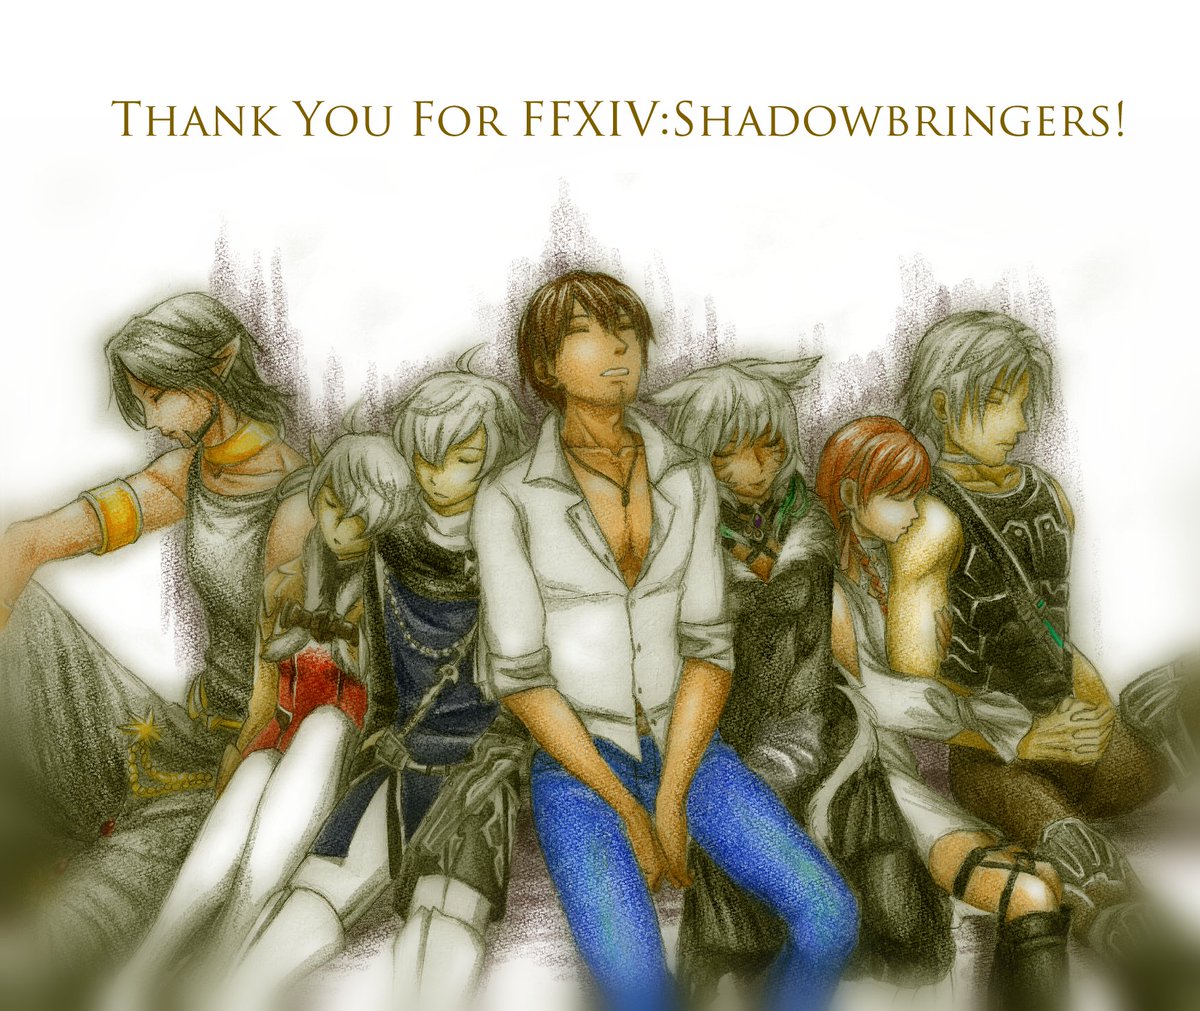 Thank you for bringing FFXIV into my life :) 
#ffxiv #shadowbringers #scionsoftheseventhdawn